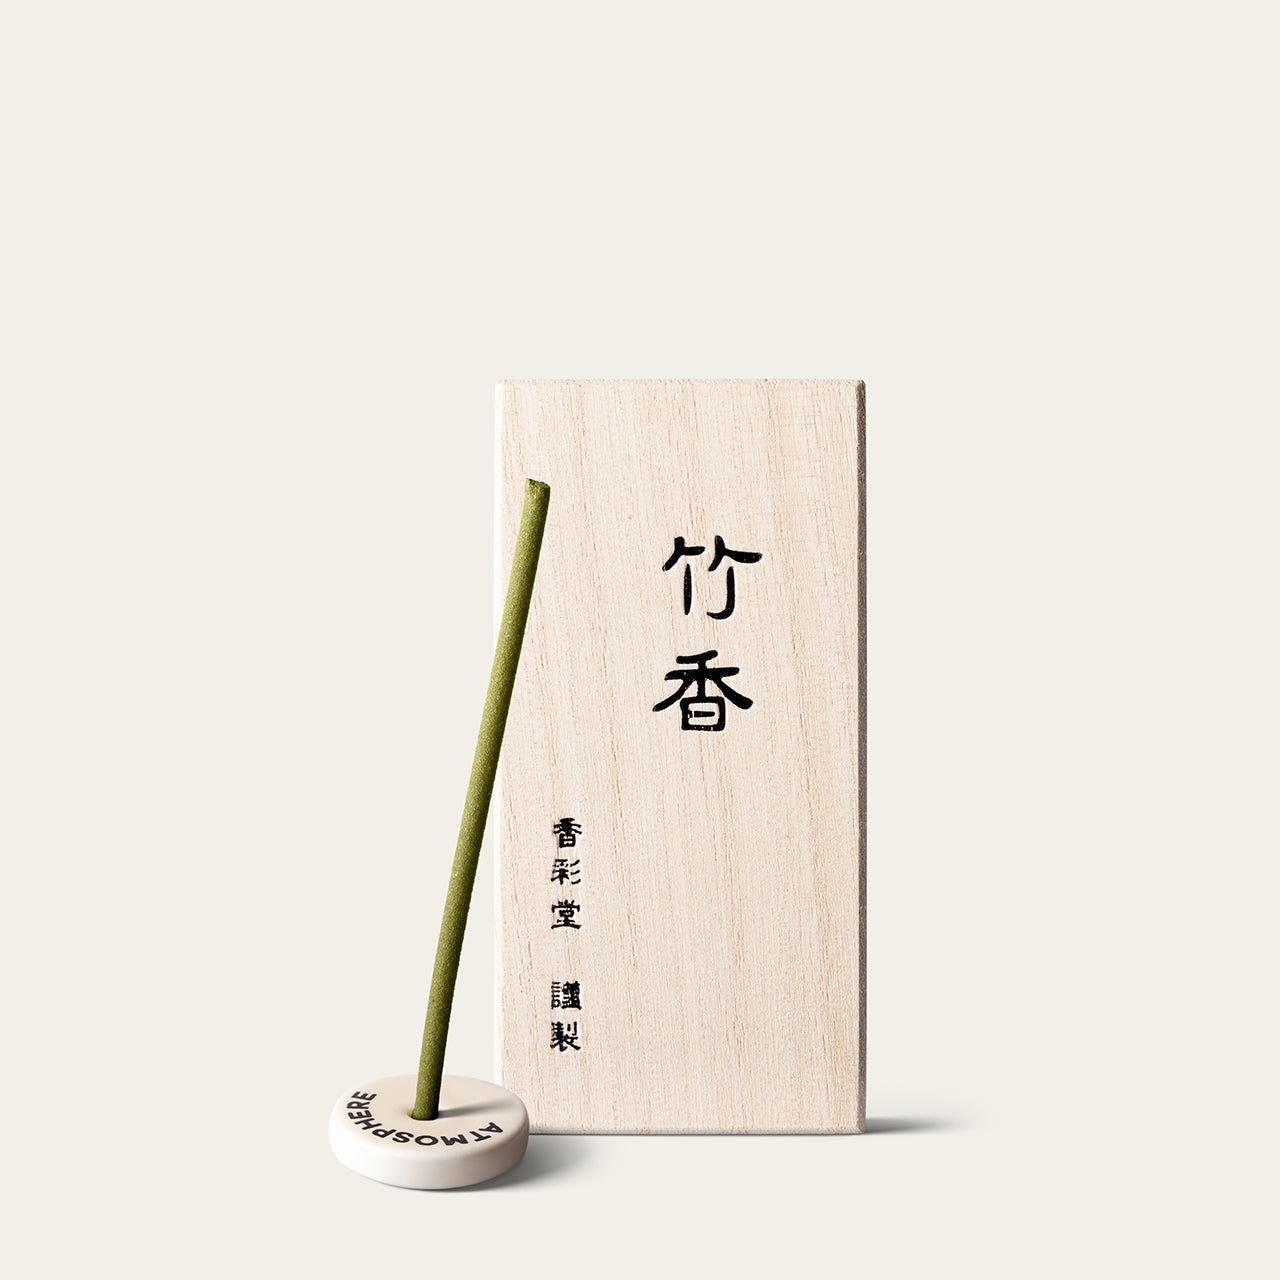 Kousaido Ancient City Bamboo Takeka Japanese incense sticks (30 sticks) with Atmosphere ceramic incense holder